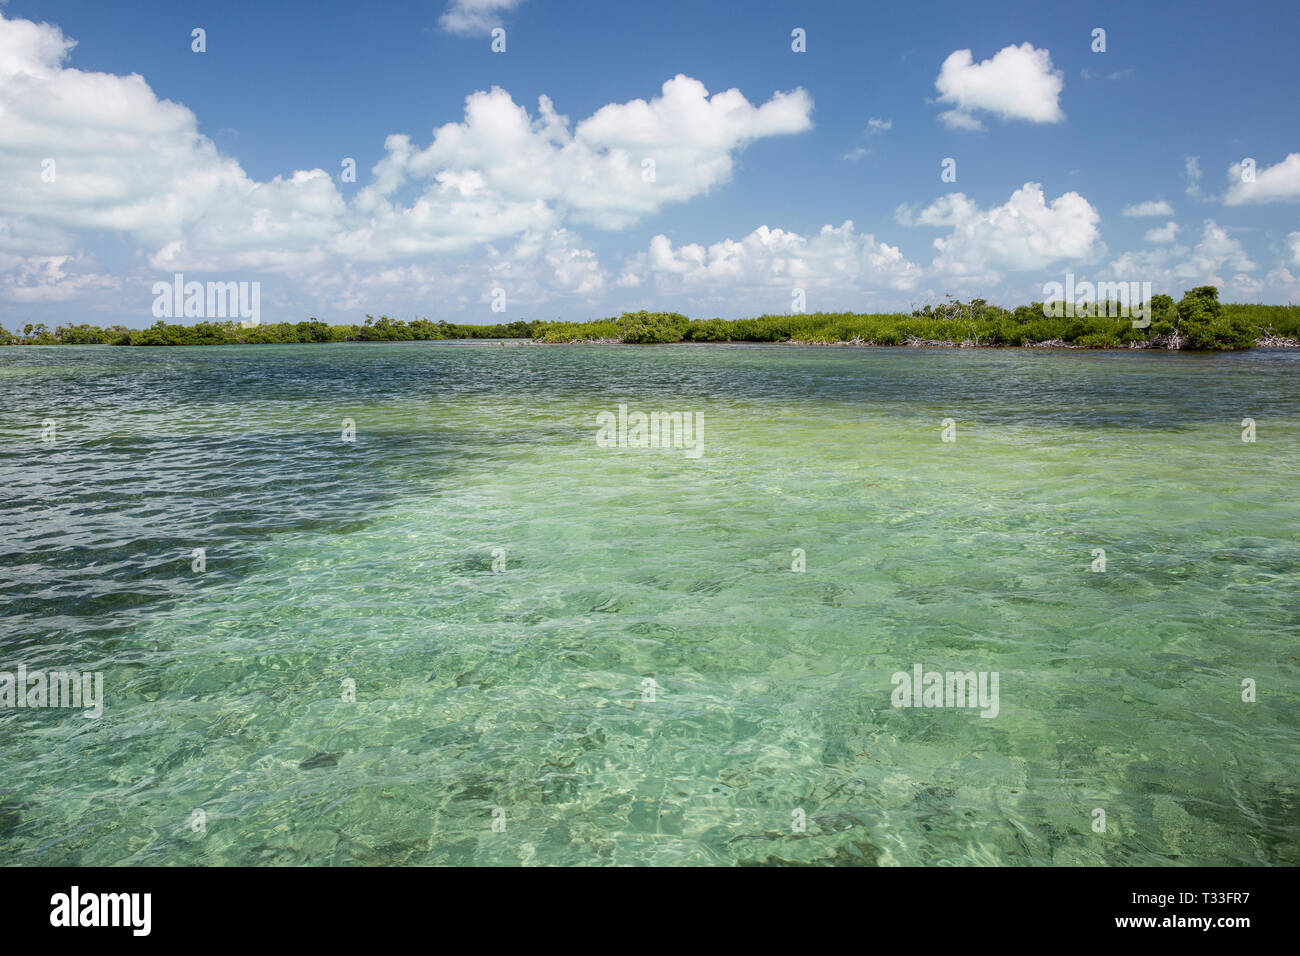 Lagoon of Chinchorro Banks, Banco Chinchorro, Caribbean Sea, Mexico Stock Photo